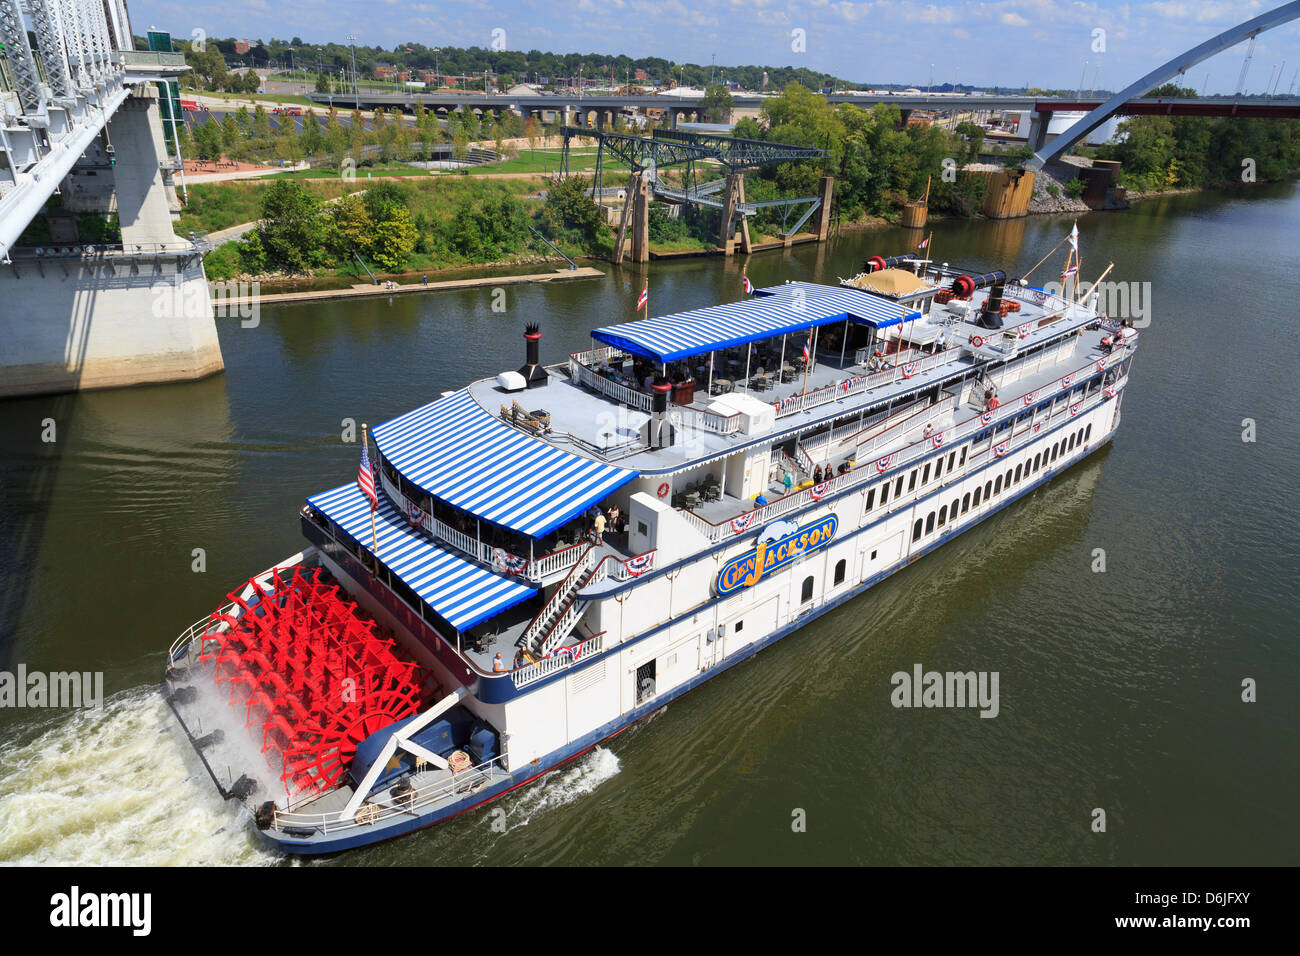 riverboat casino cruises in nashville tn